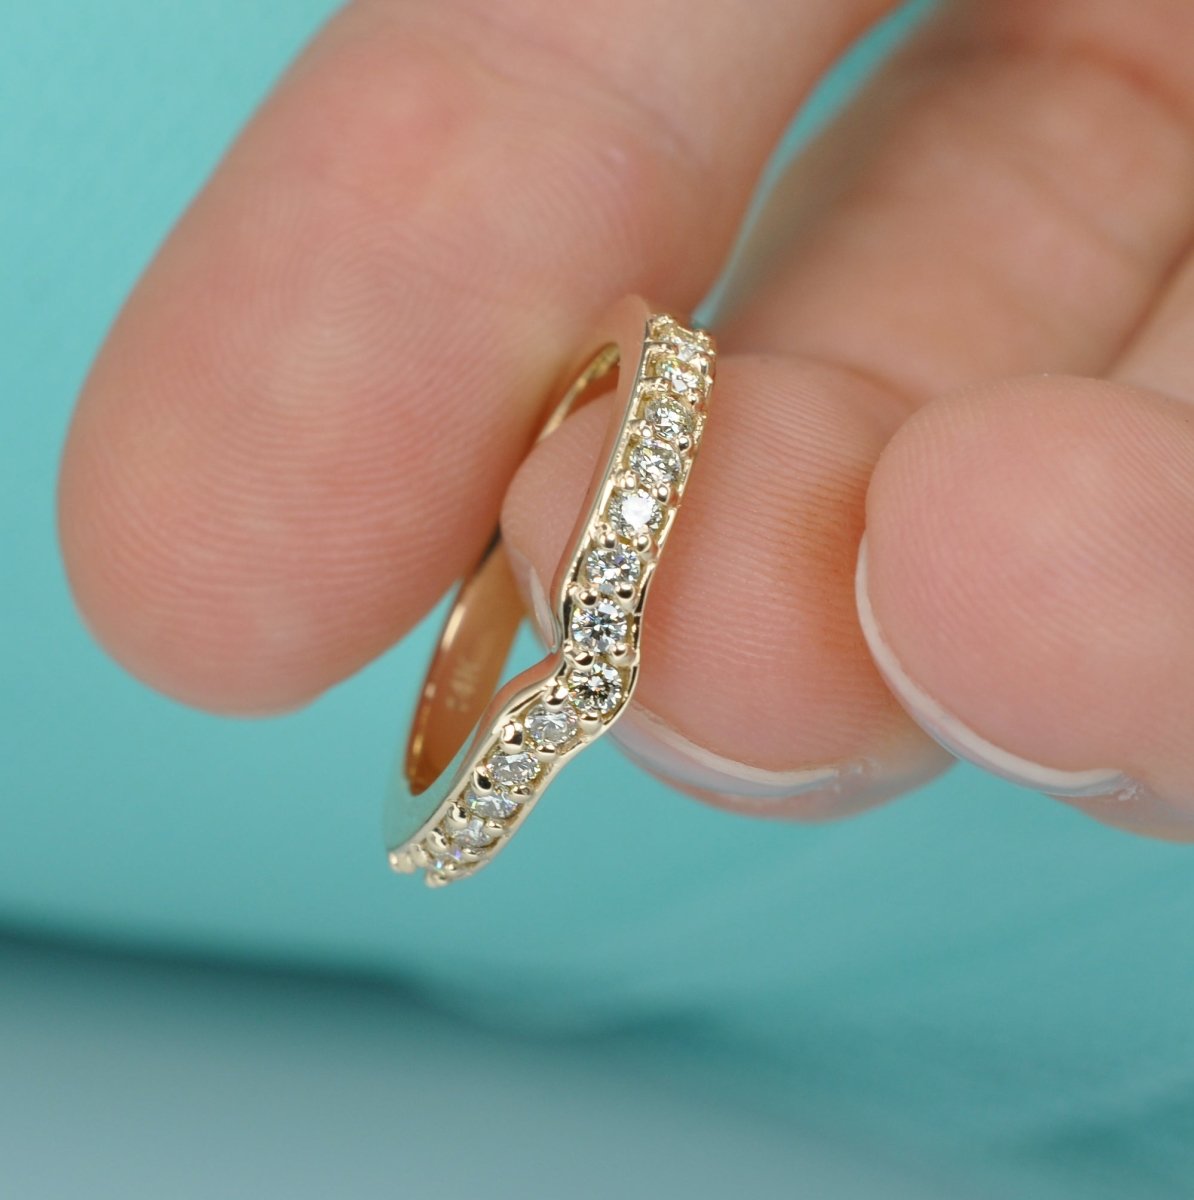 Delightful 0.35 CT Round Cut Diamond Wedding Ring in 18 KT Yellow Gold - Primestyle.com